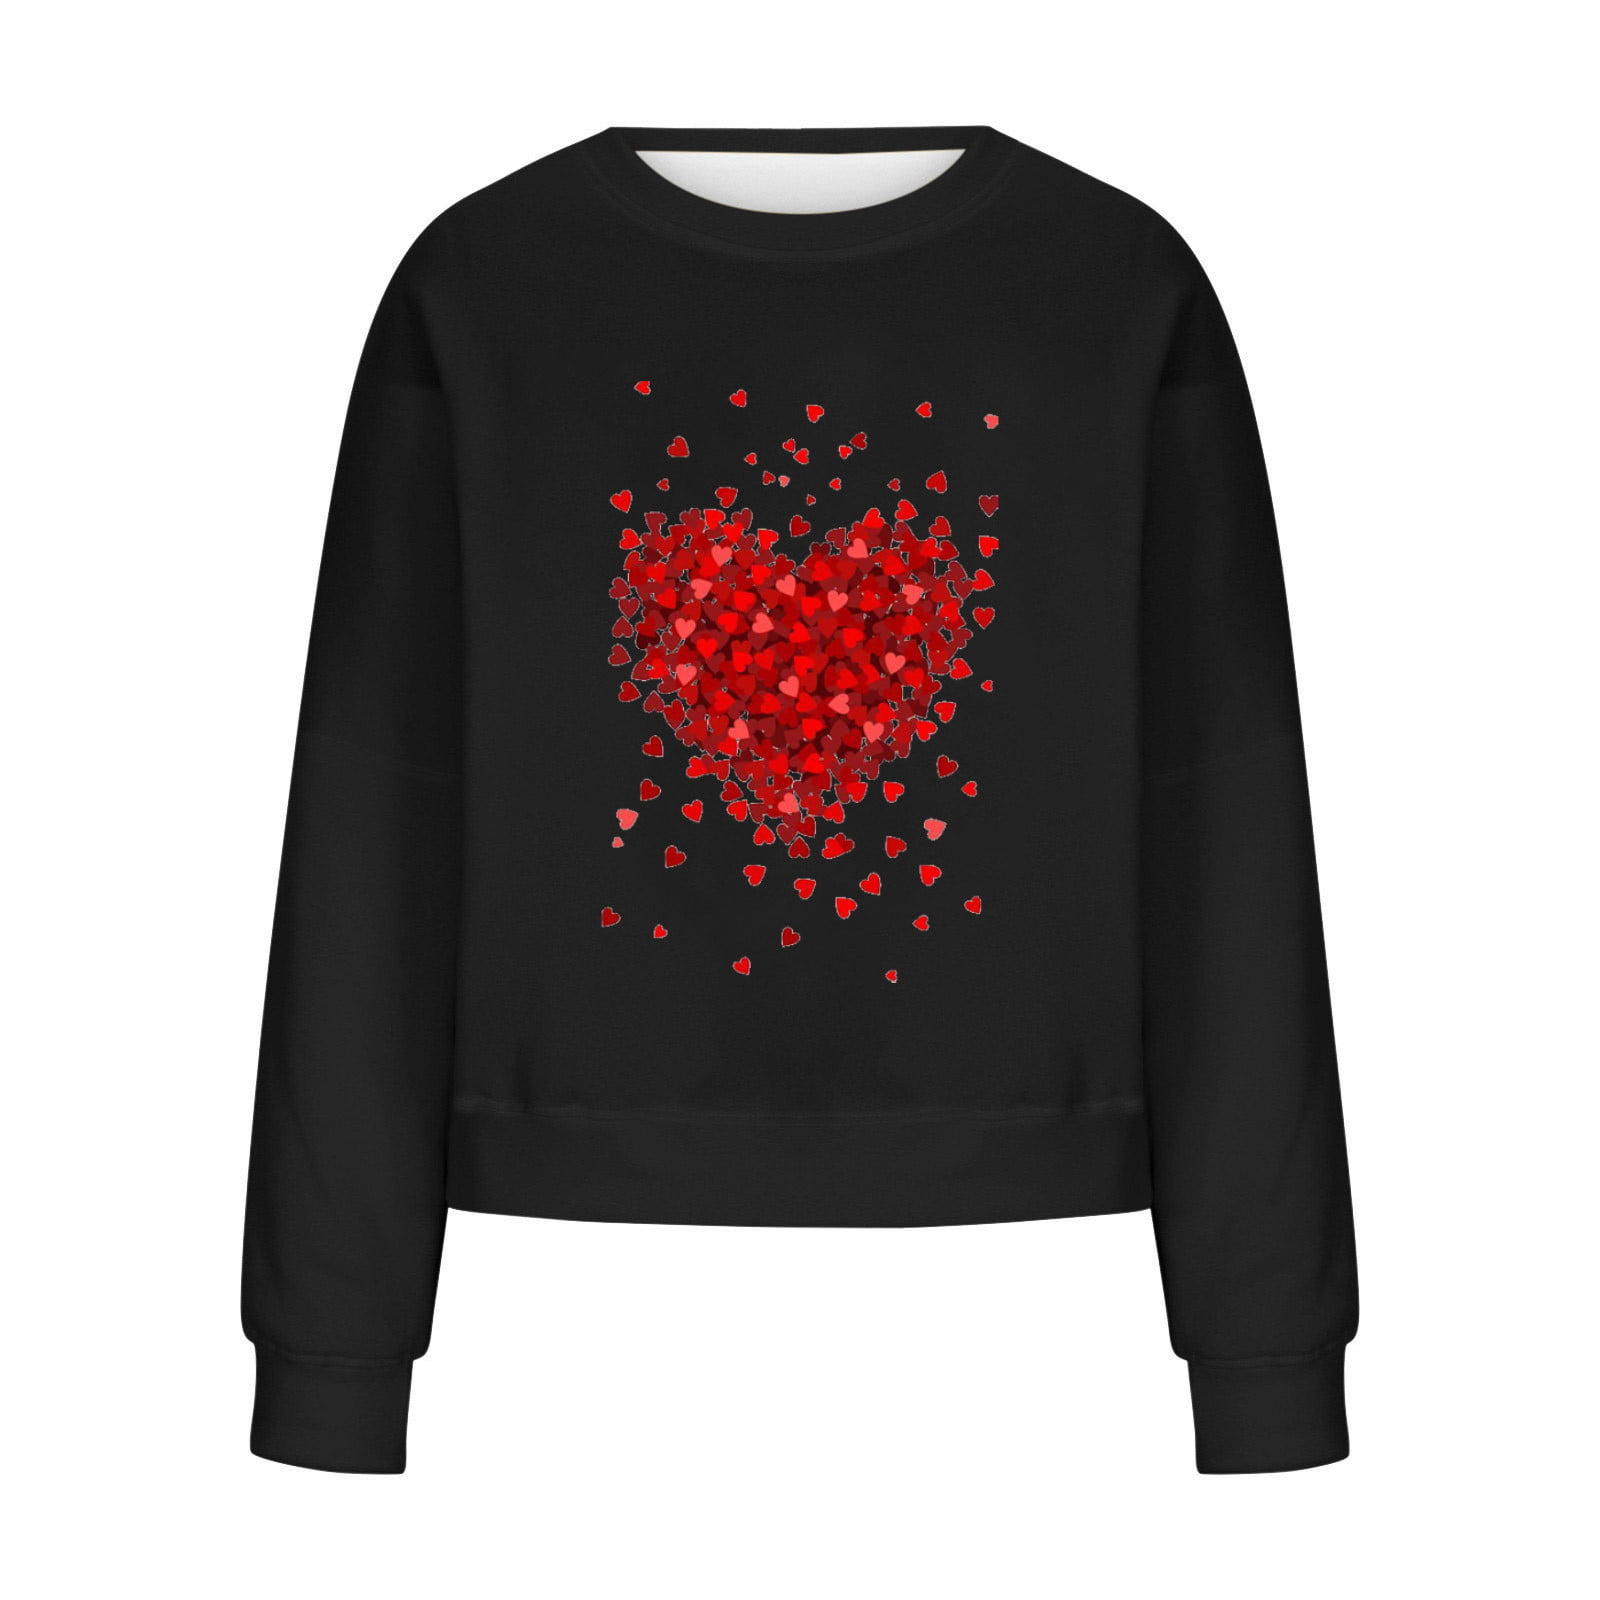 Hfyihgf Valentines Day Shirts Women Oversized Love Heart Graphic Pullover  Sweatshirts Long Sleeve Crewneck Plus Size Tunic Tops(02#Black,3XL) 